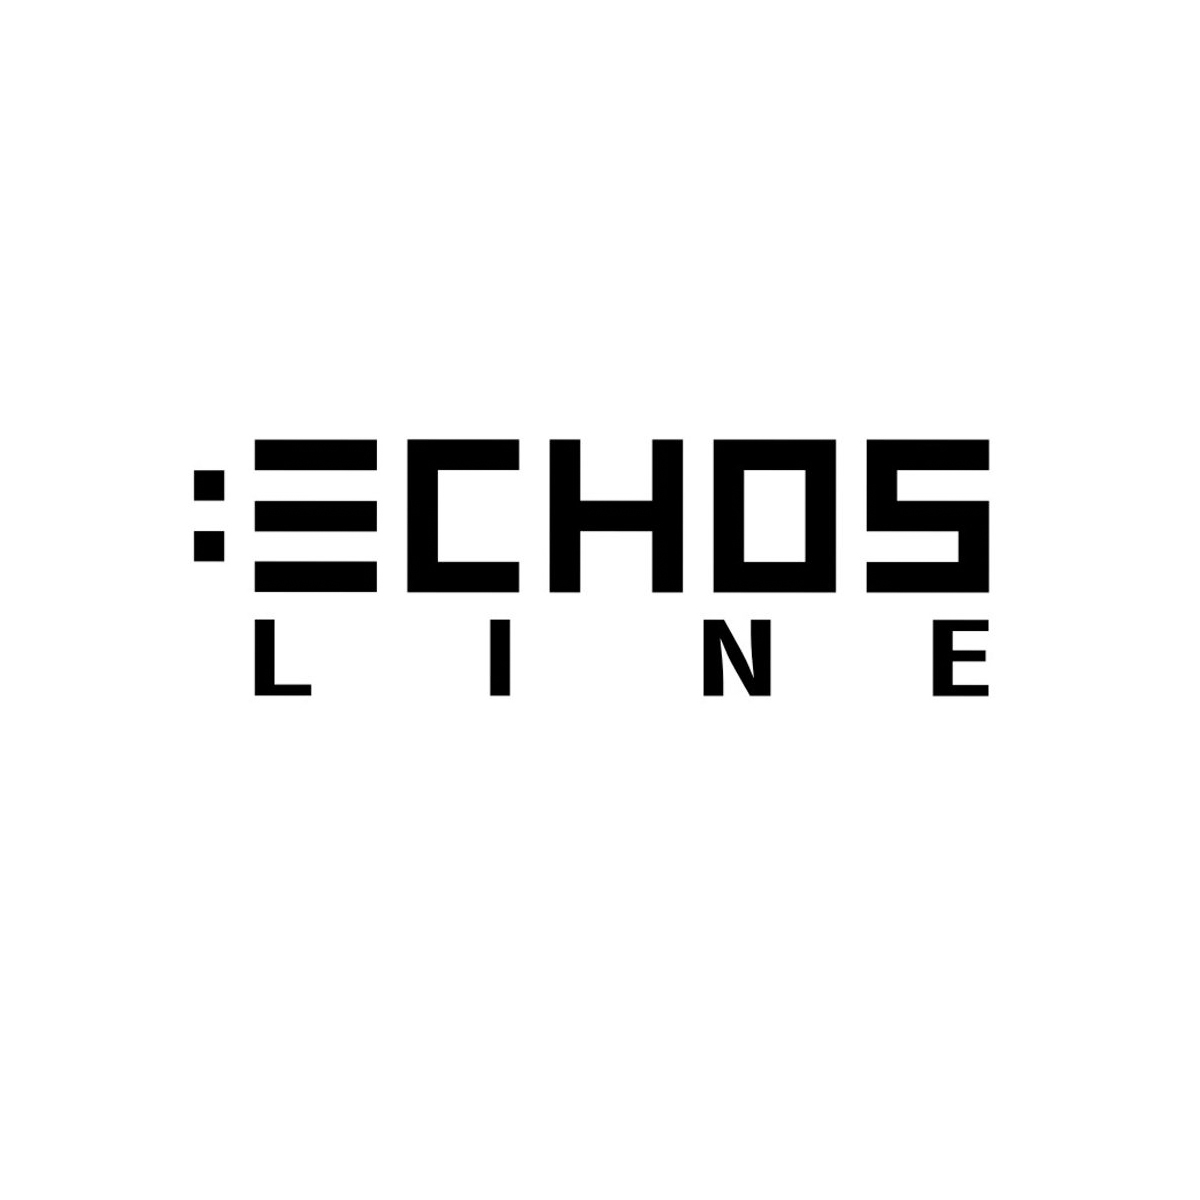 EchosLine